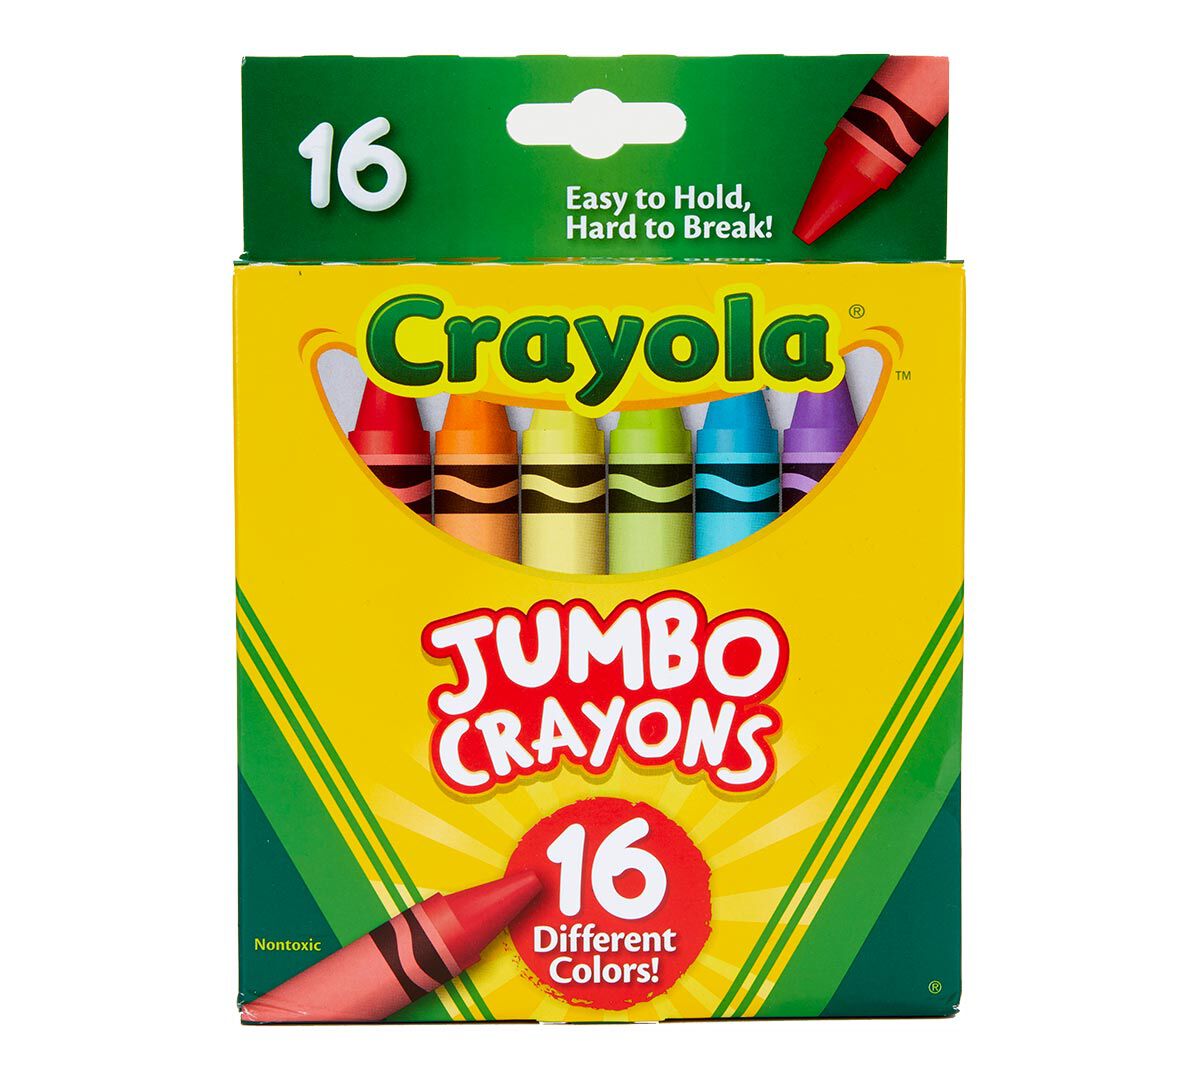 Crayola Jumbo Crayons for Toddlers, Coloring Supplies, 16ct | Crayola